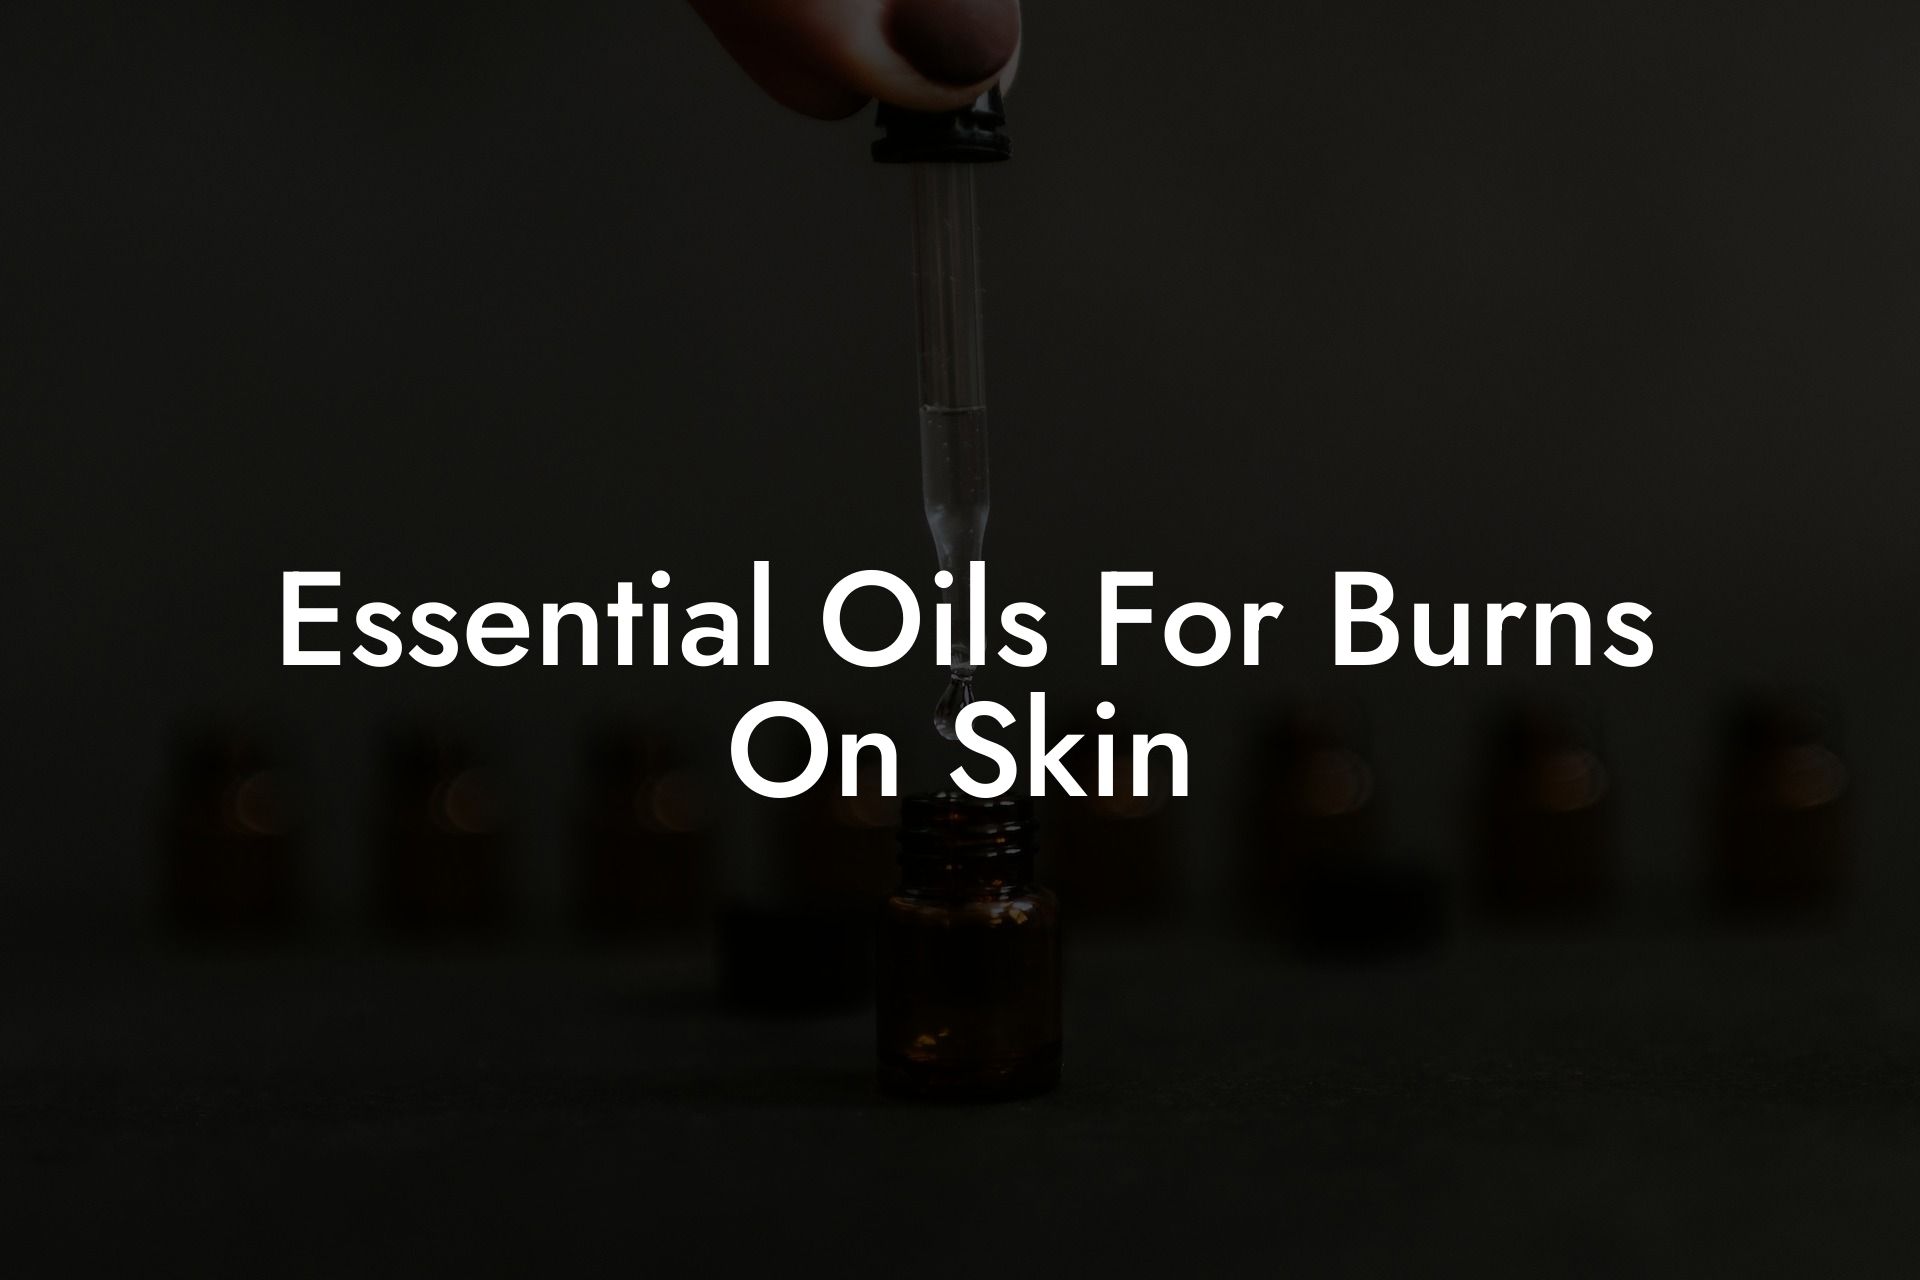 Essential Oils For Burns On Skin